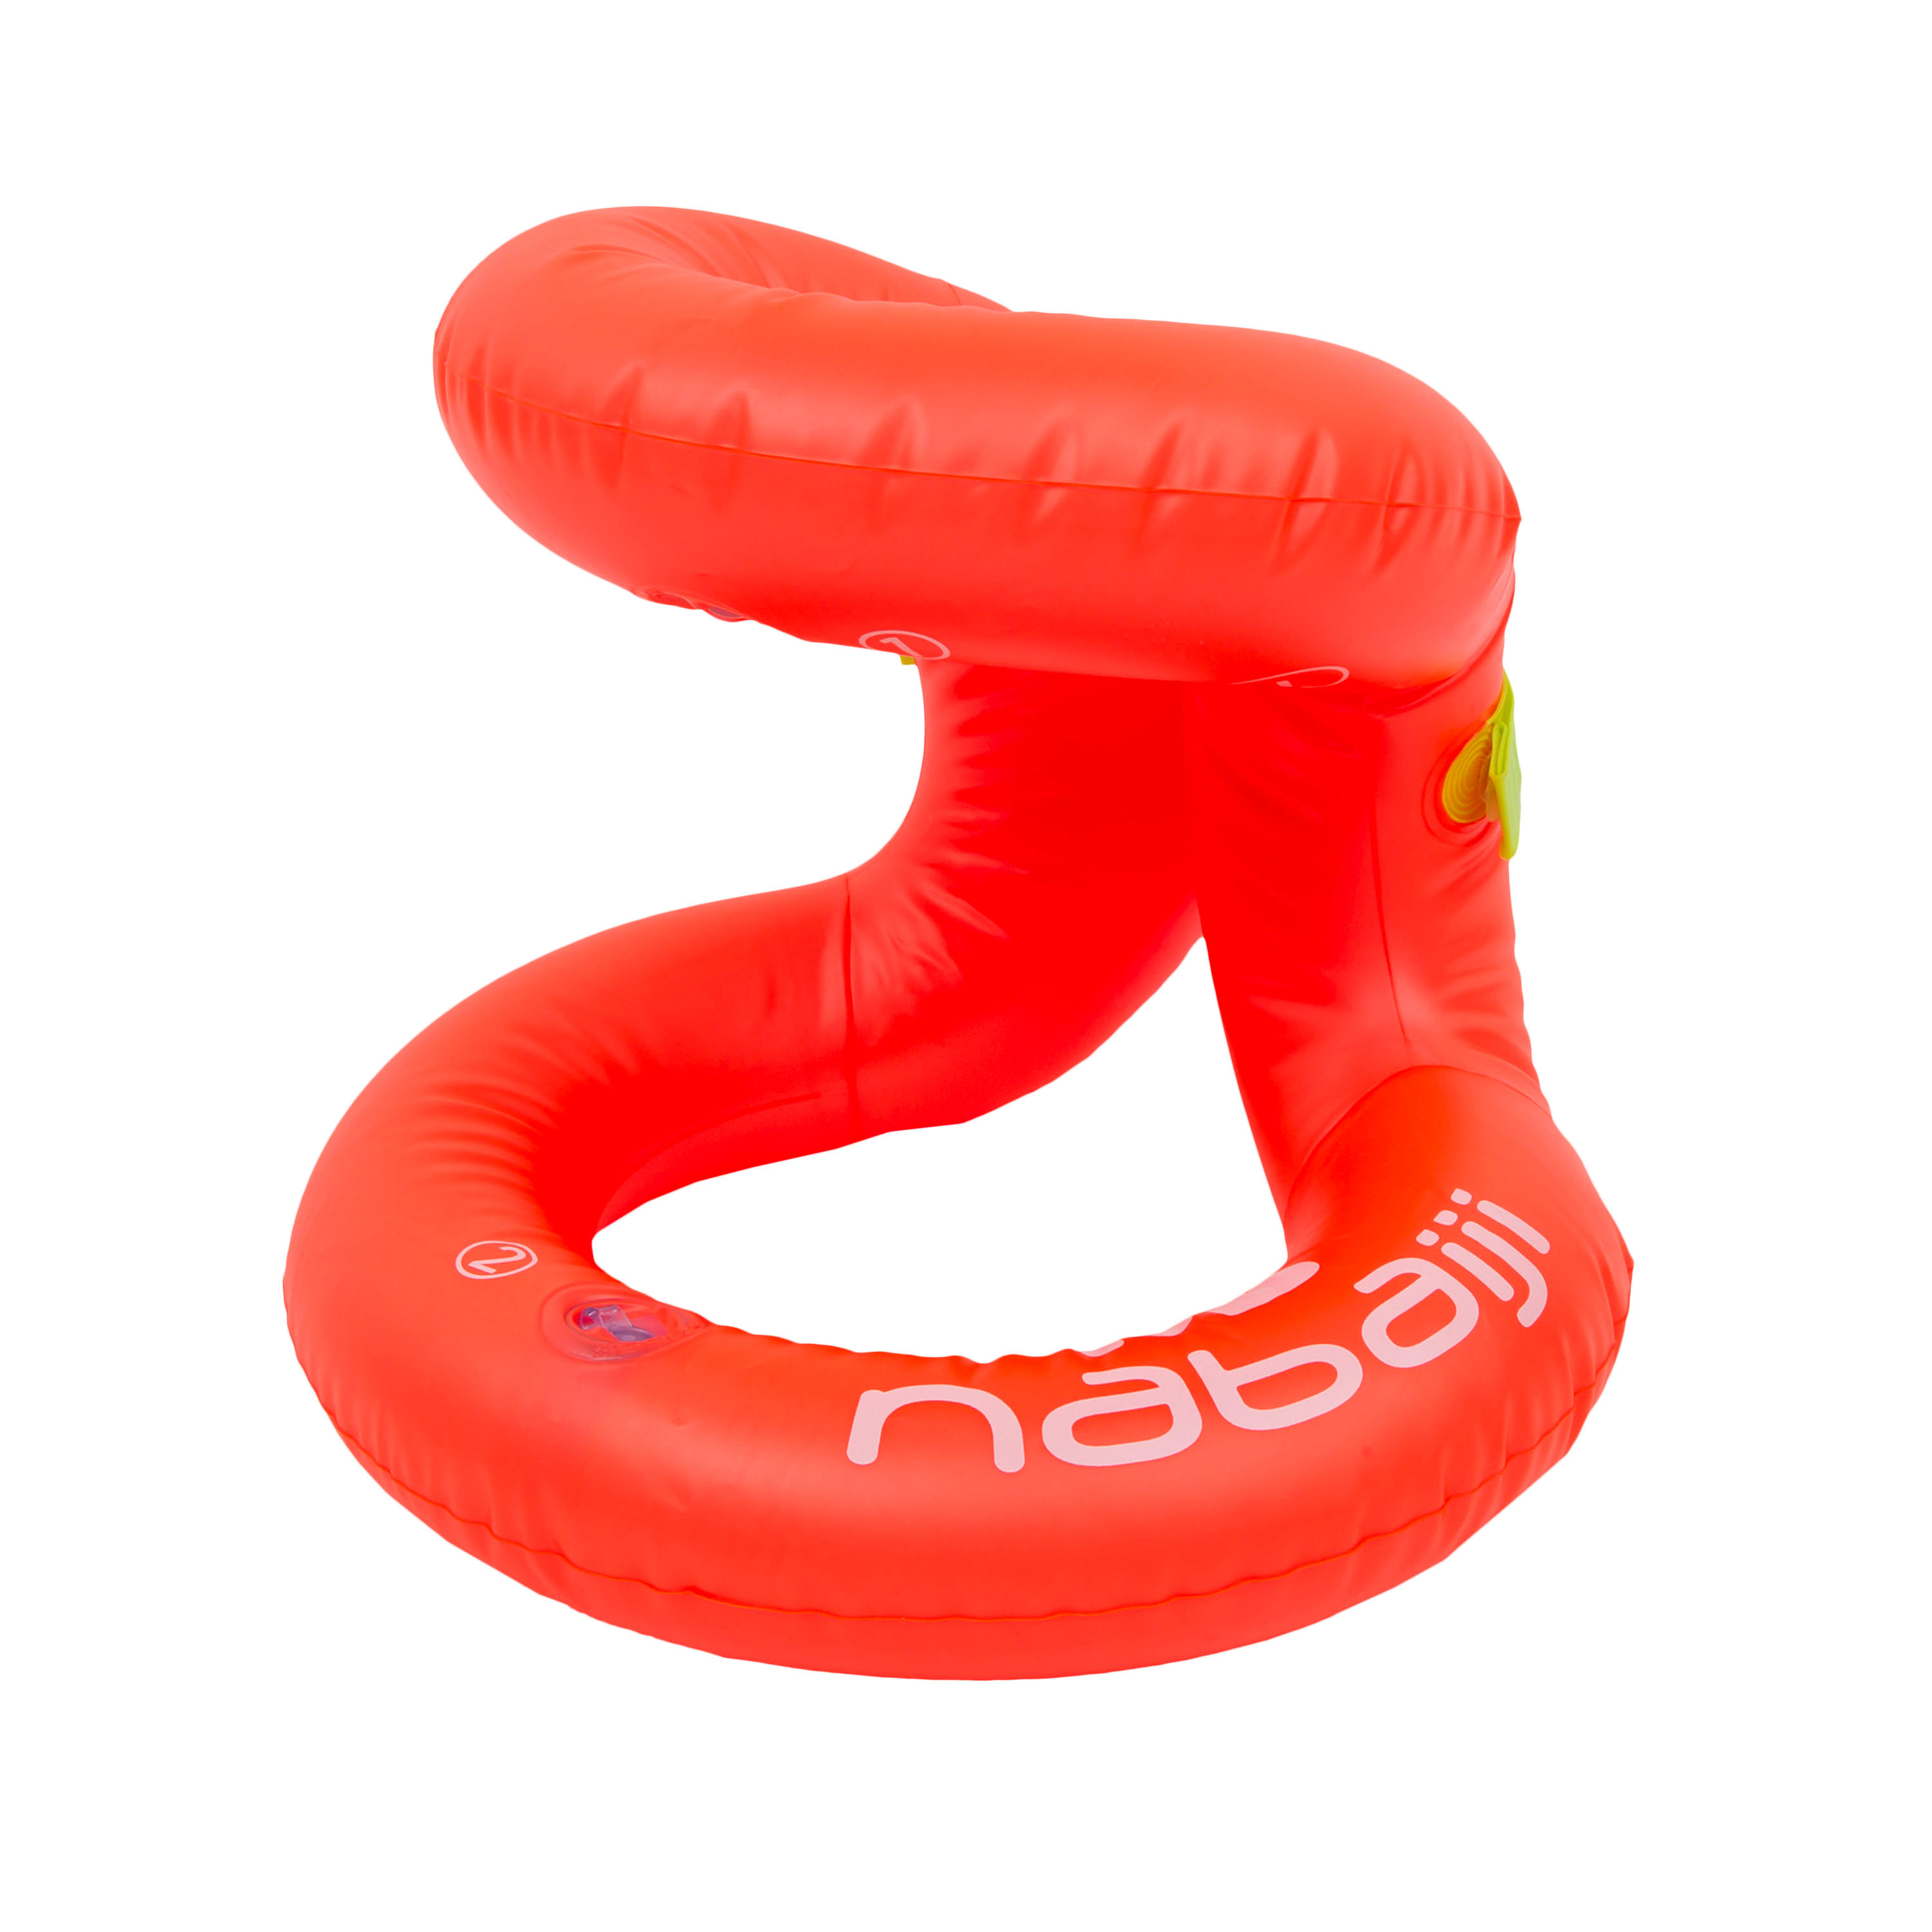 Swimming inflatable life vest for 18-30 kg - orange 5/6